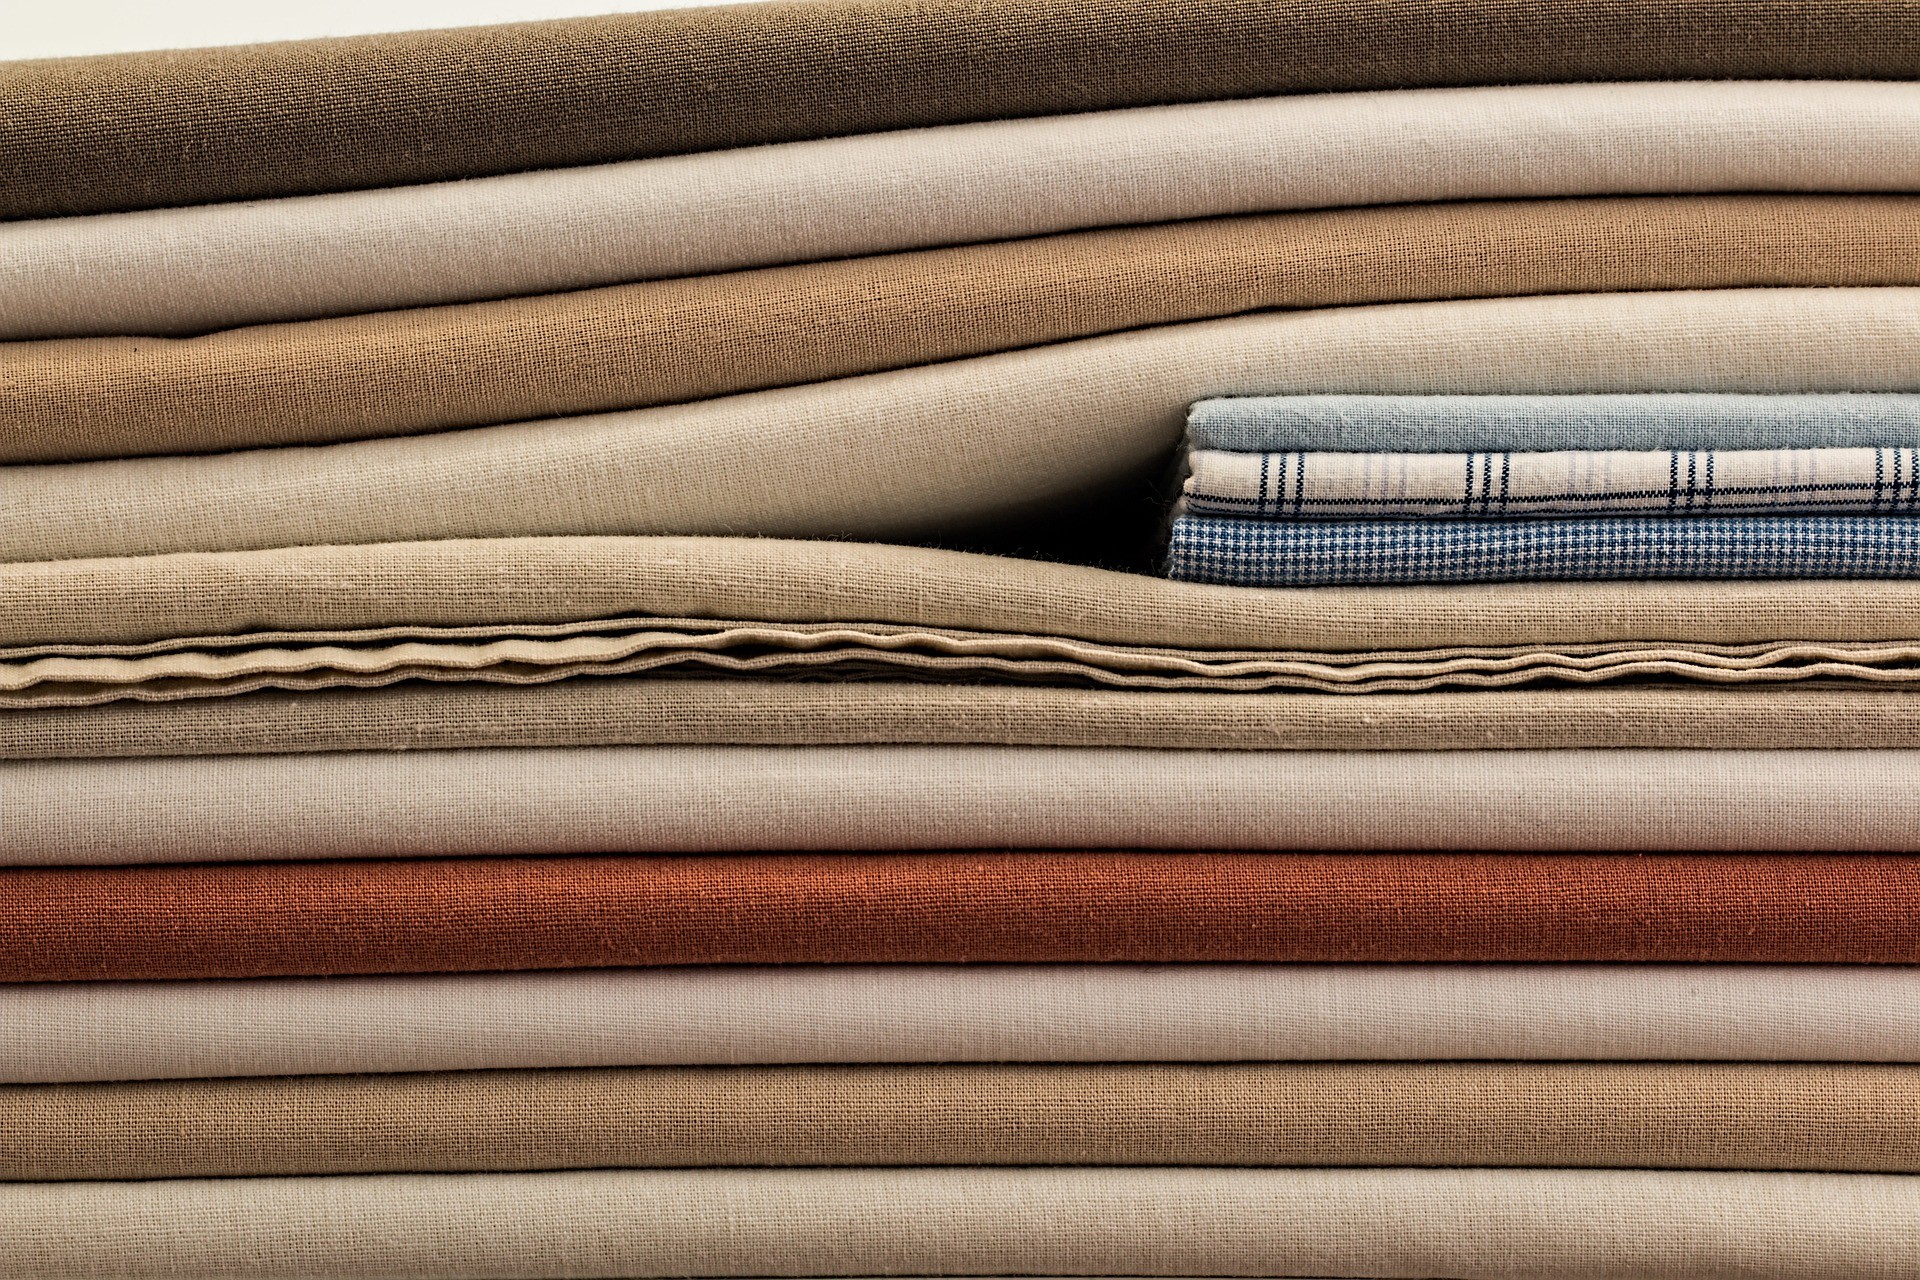 7 Amazing Benefits of Wearing Linen Fabrics